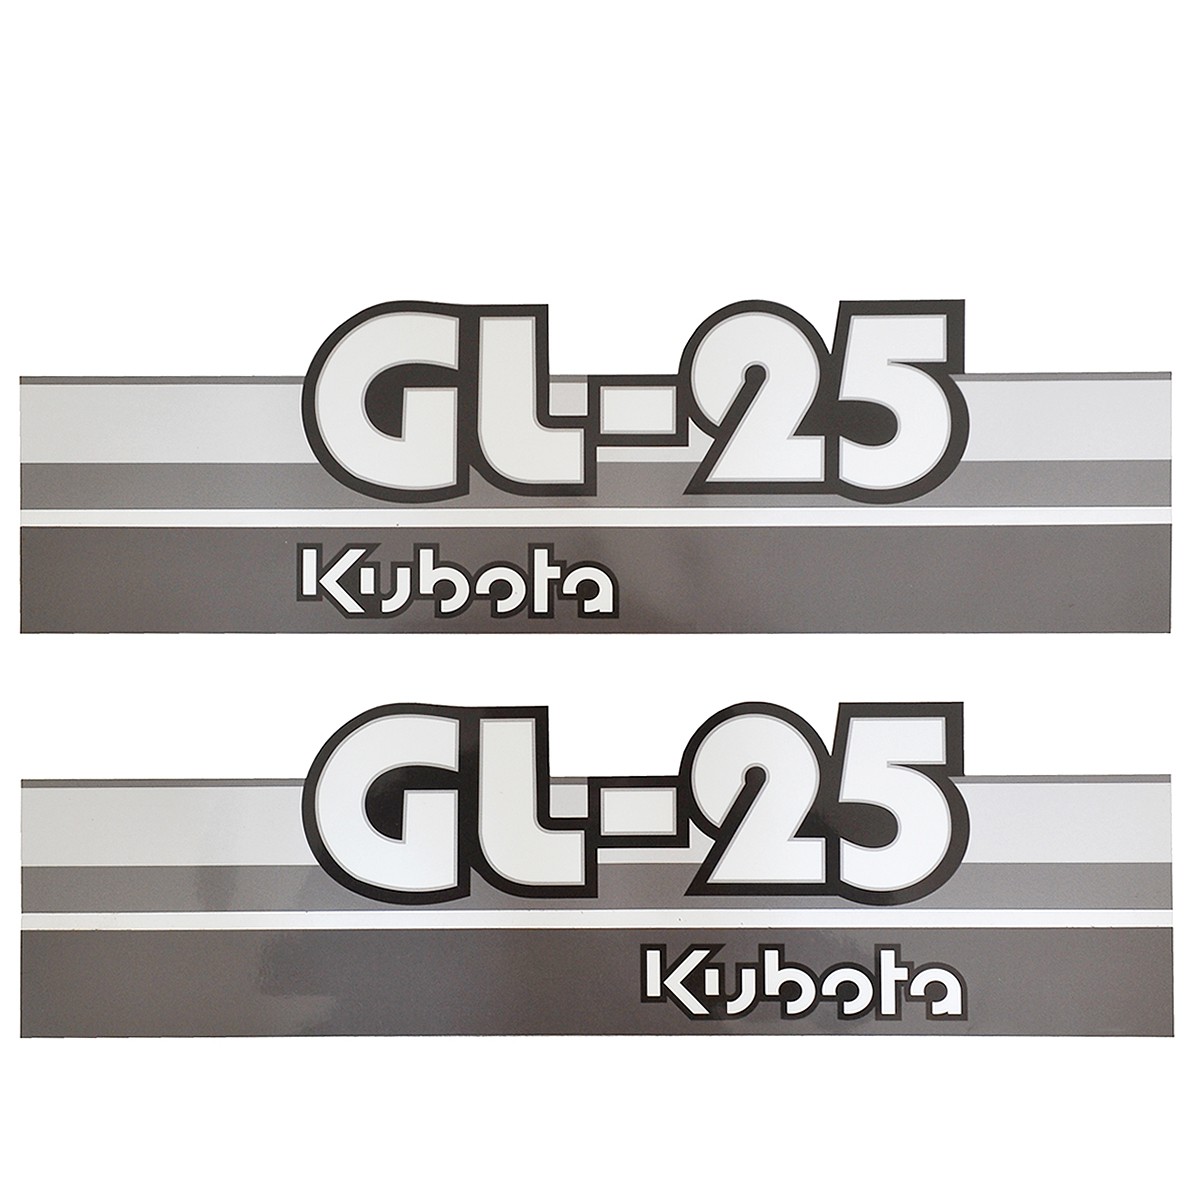 Kubota GL25 Aufkleber